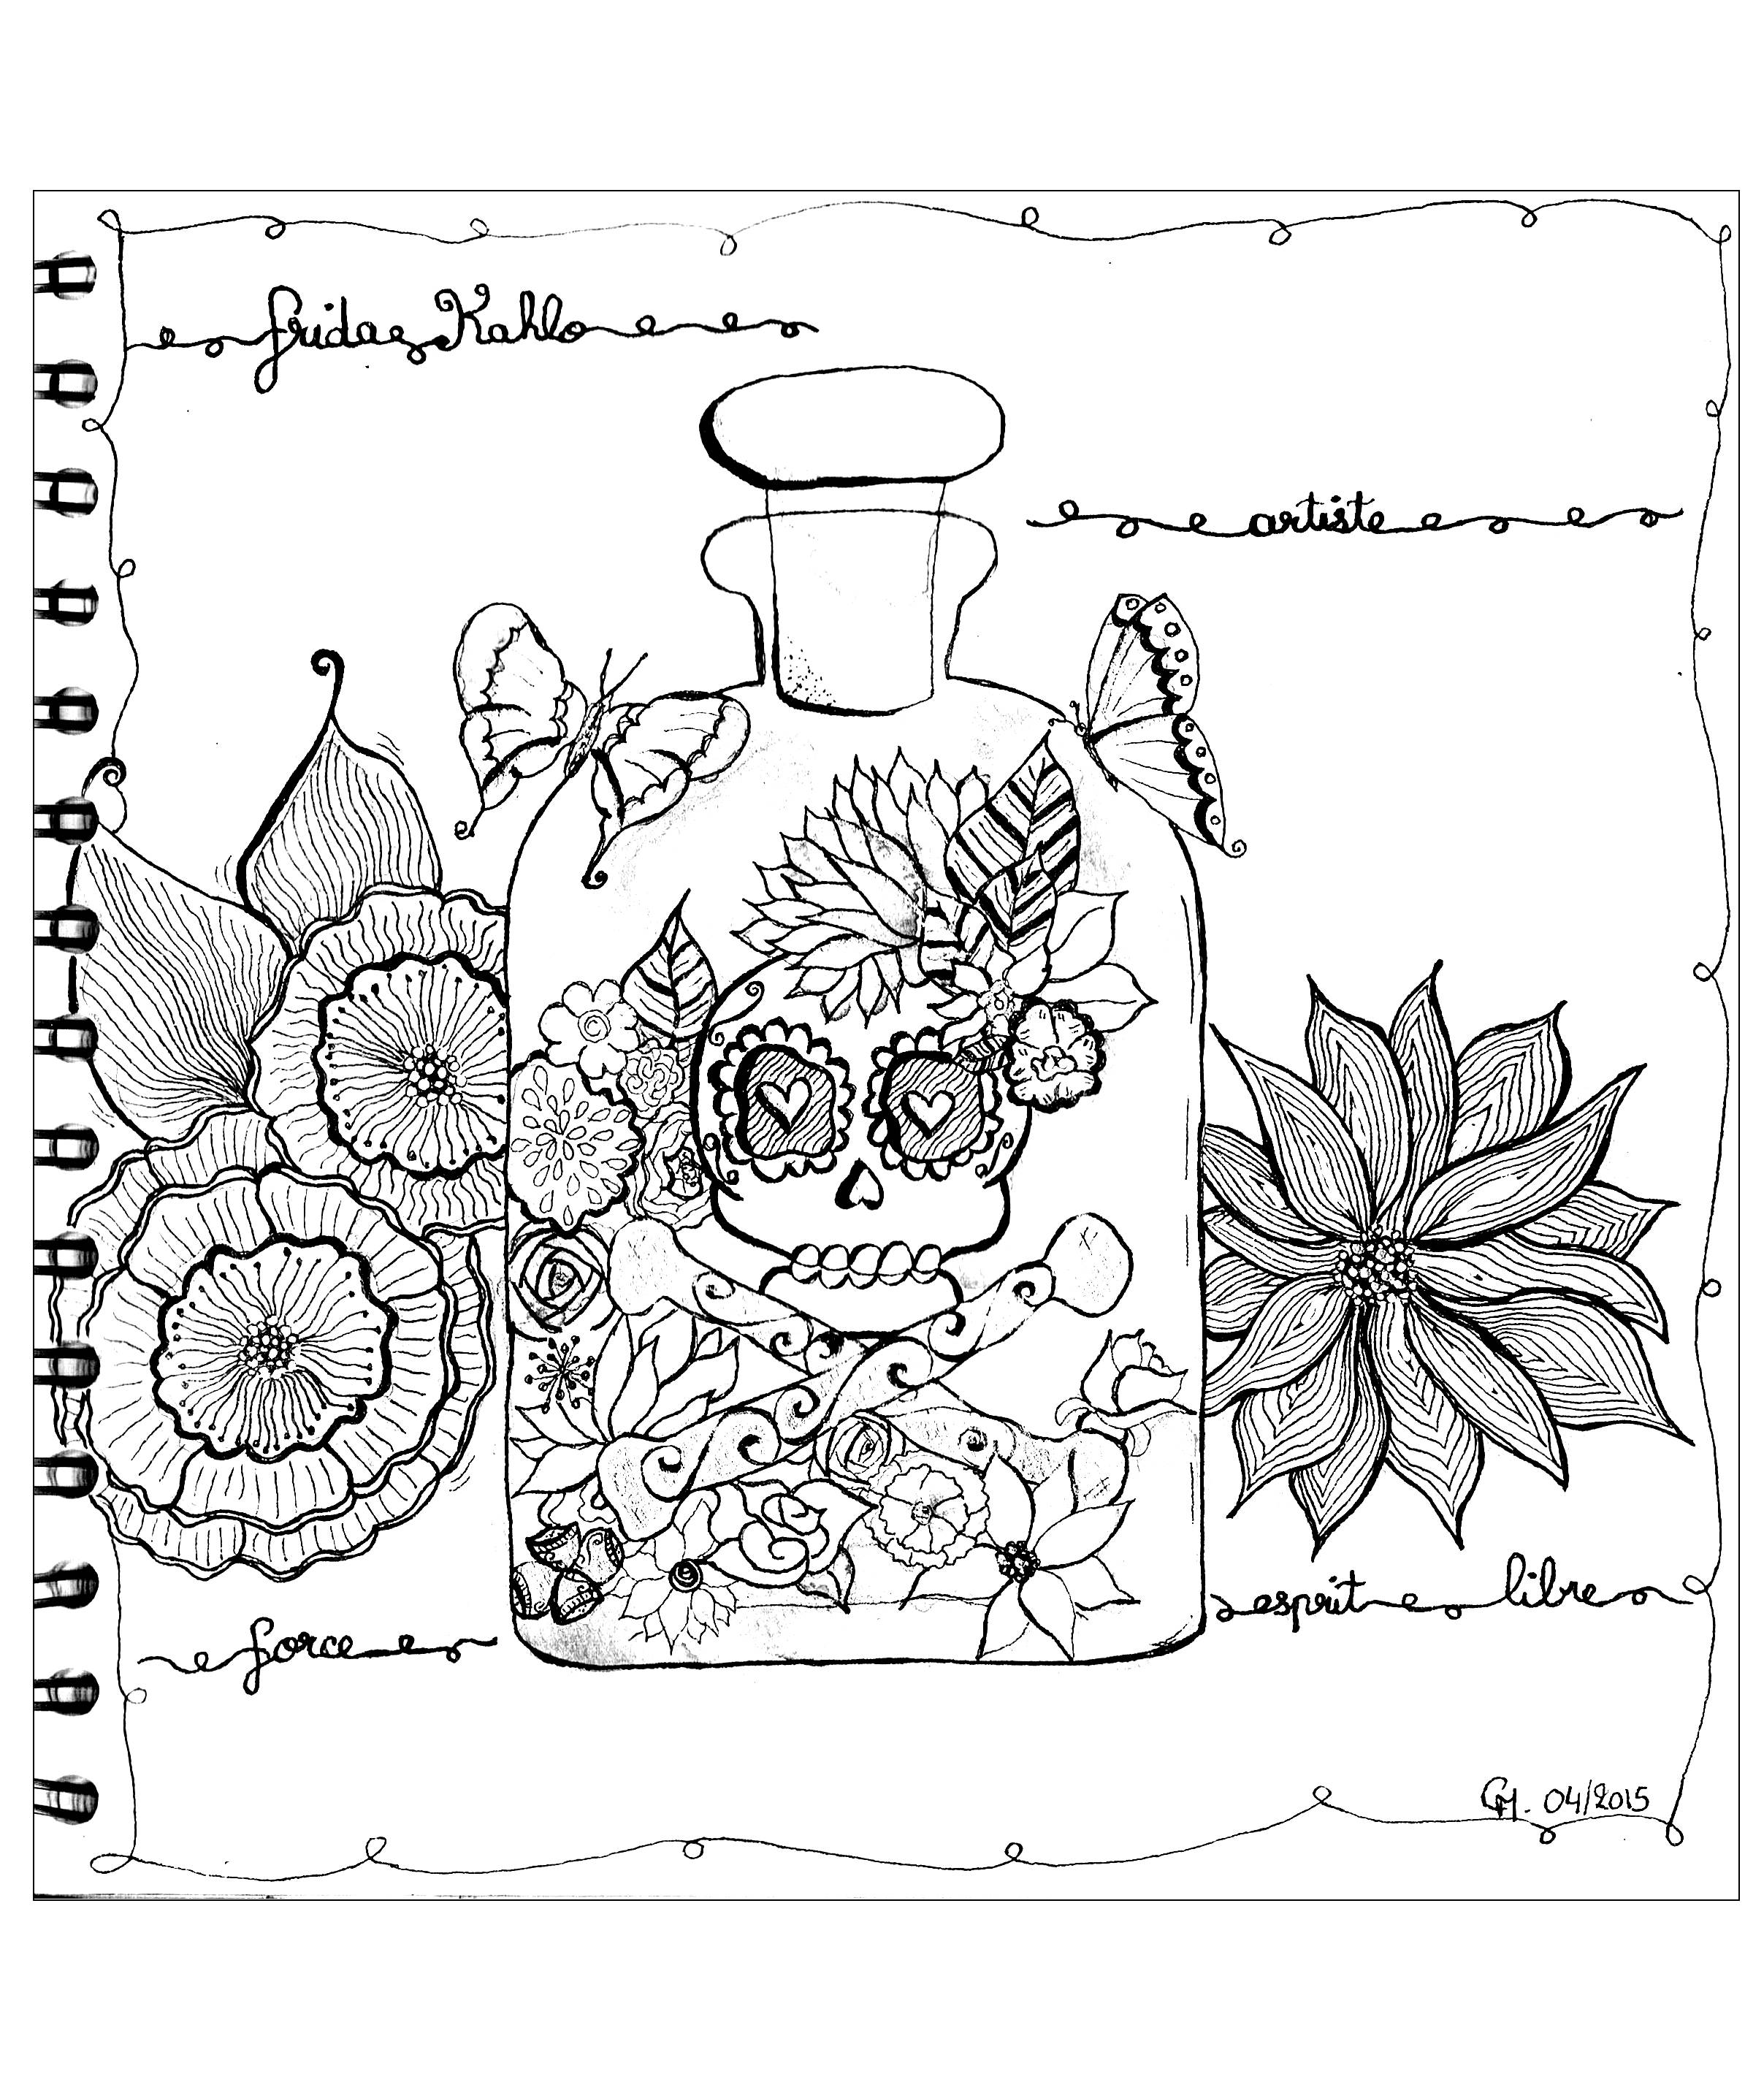 'Tribute to Frida Khalo', original coloring, Artist : Cathy M